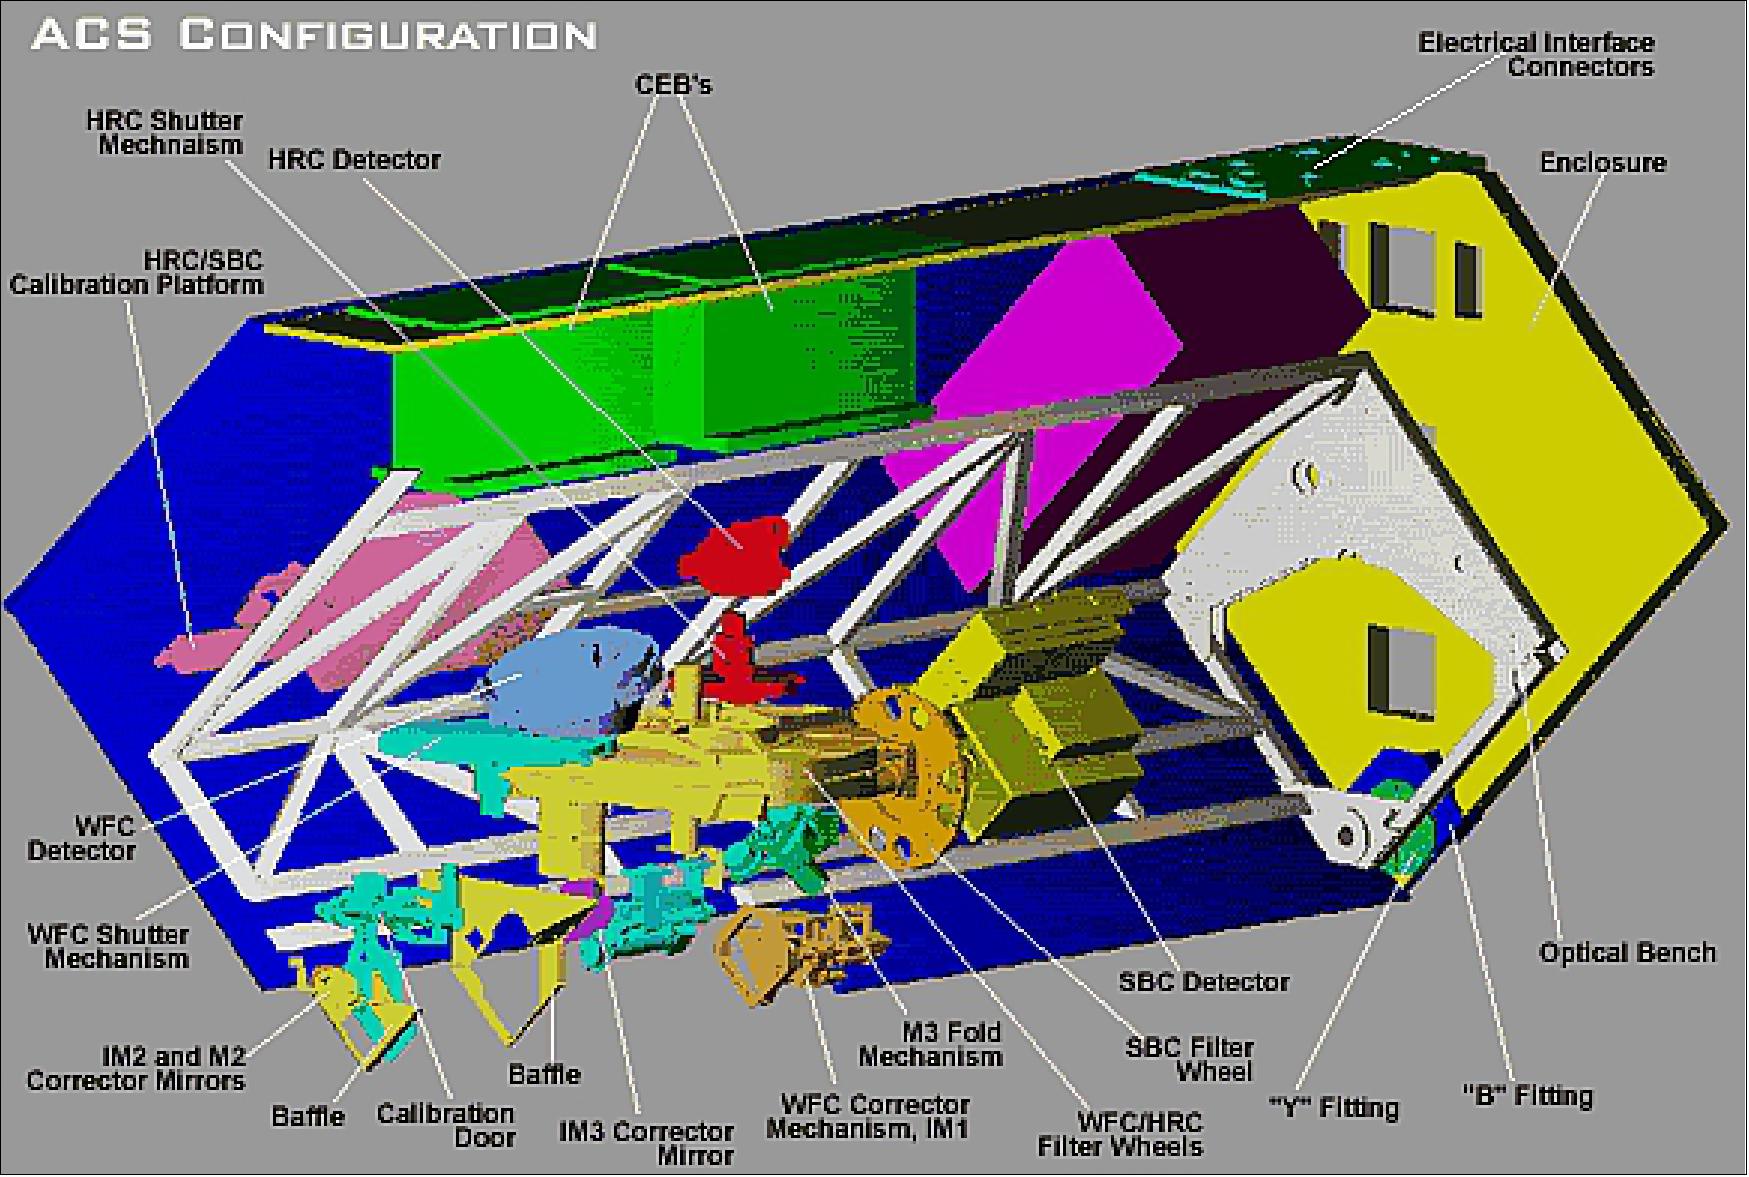 Figure 60: Illustration of the ACS instrument configuration (image credit: NASA)